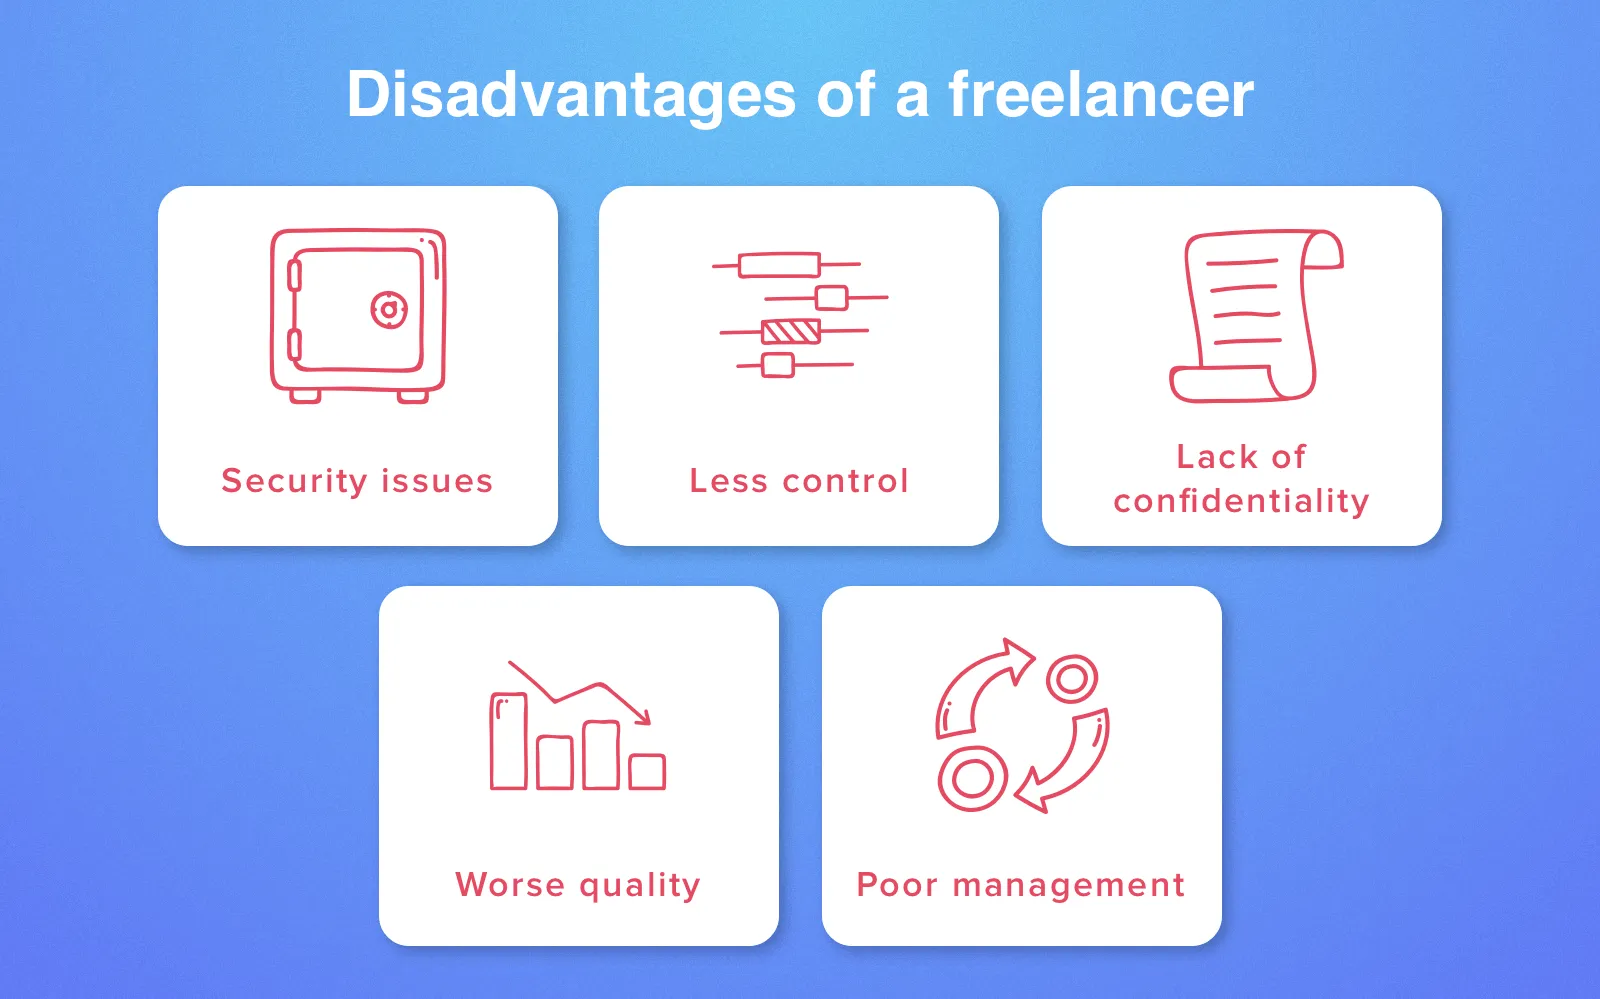 hire freelancers - disadvantages